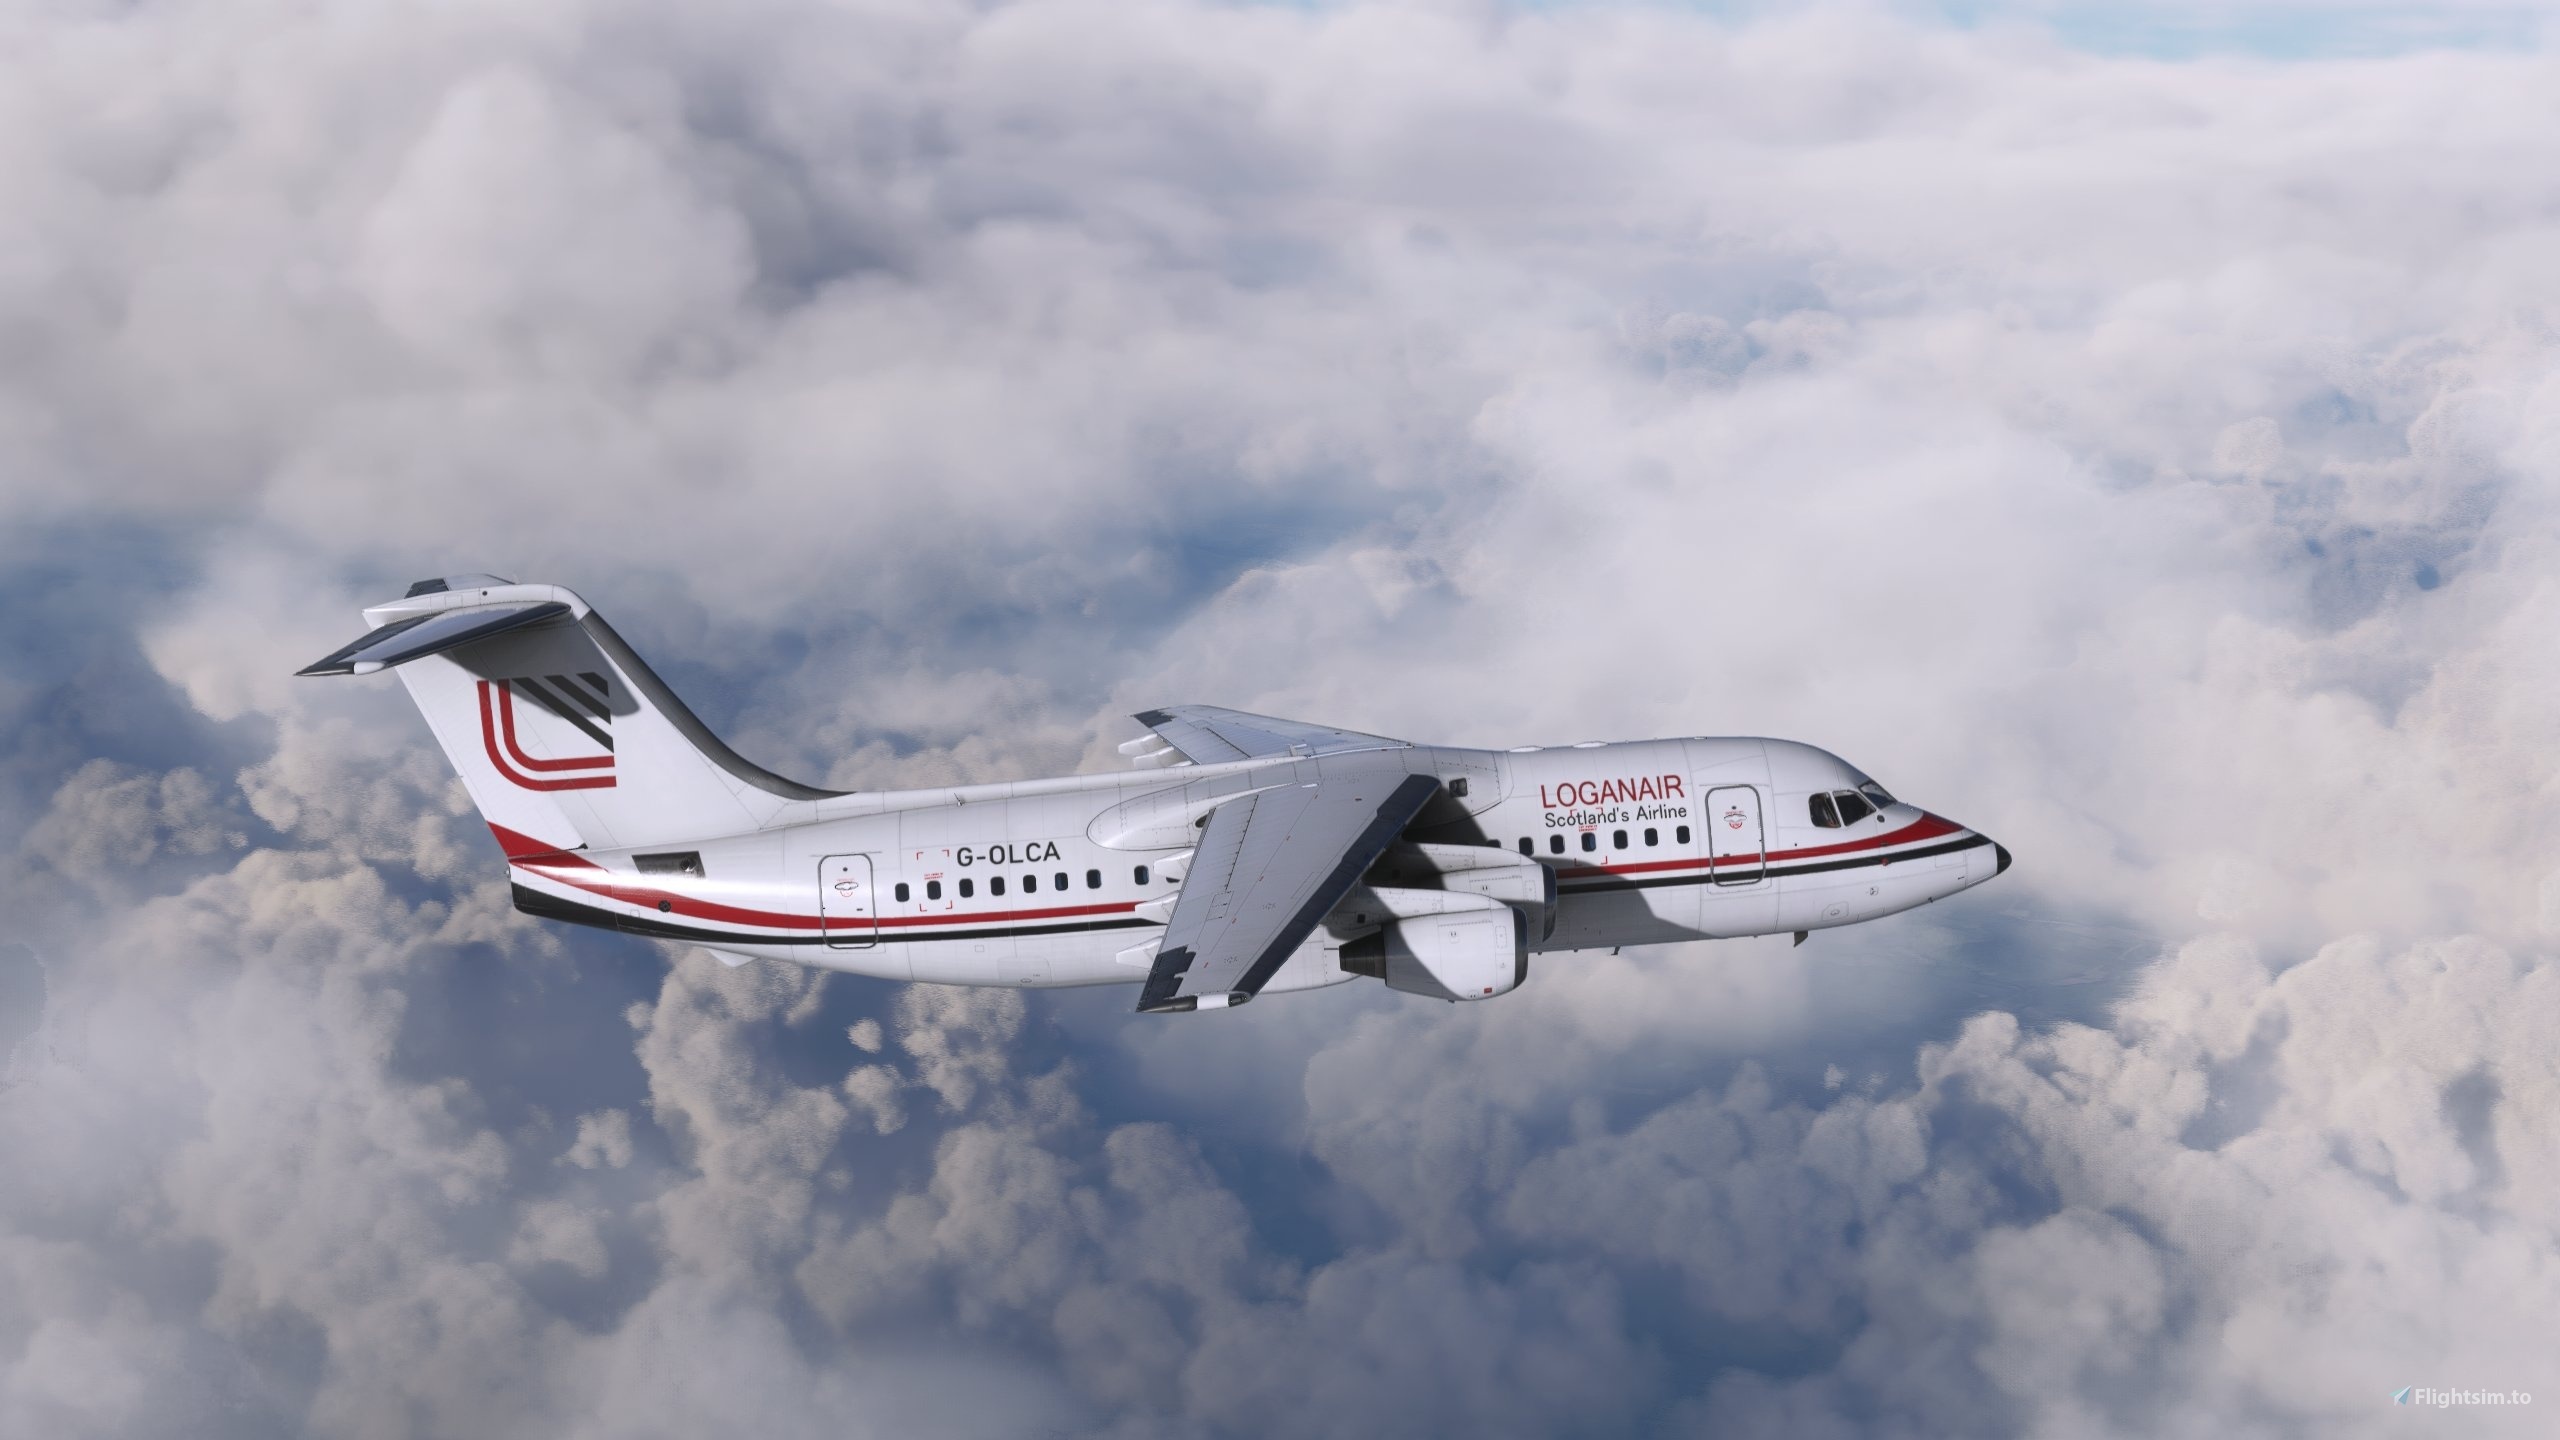 BAe 146-200 Loganair Retro G-OLCA Microsoft Flight Simulator 2560x1440